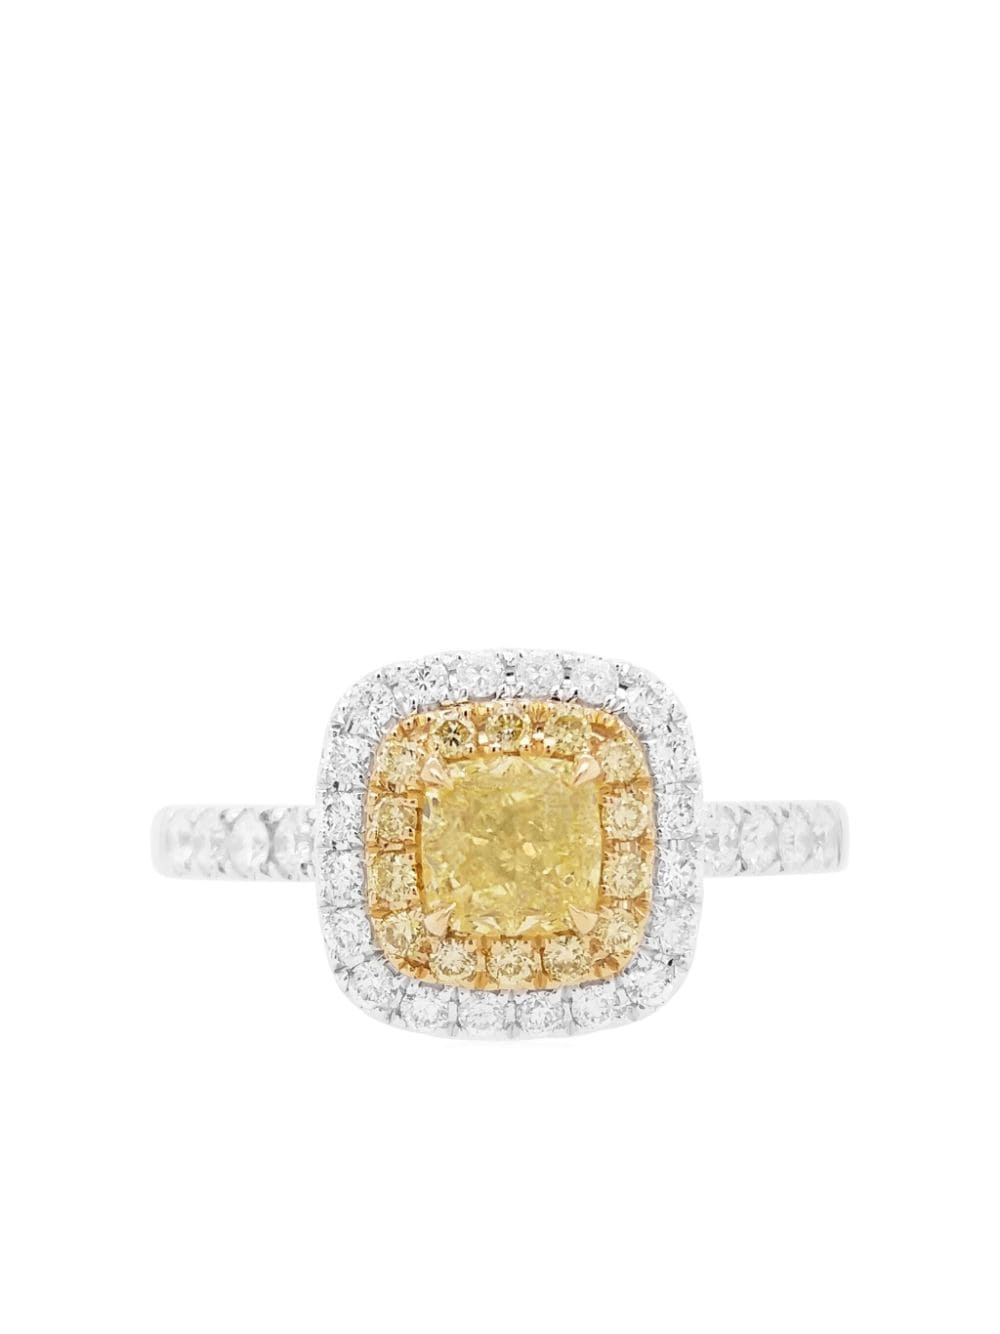 Hyt Jewelry 18kt White Gold Yellow And White Diamonds Ring